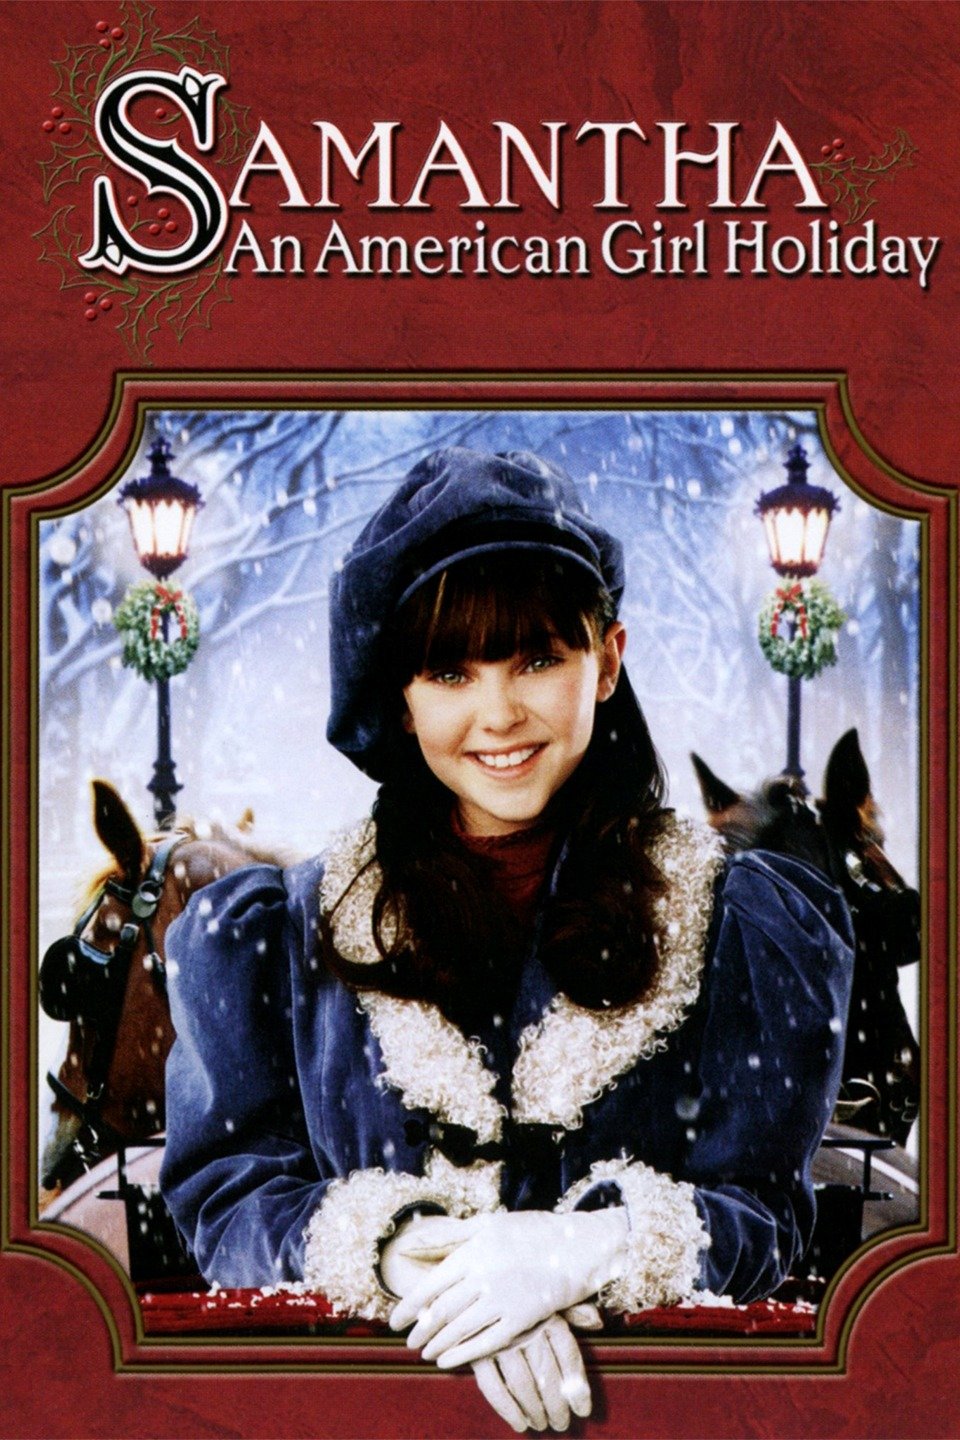 Samantha, an American Girl Holiday movie